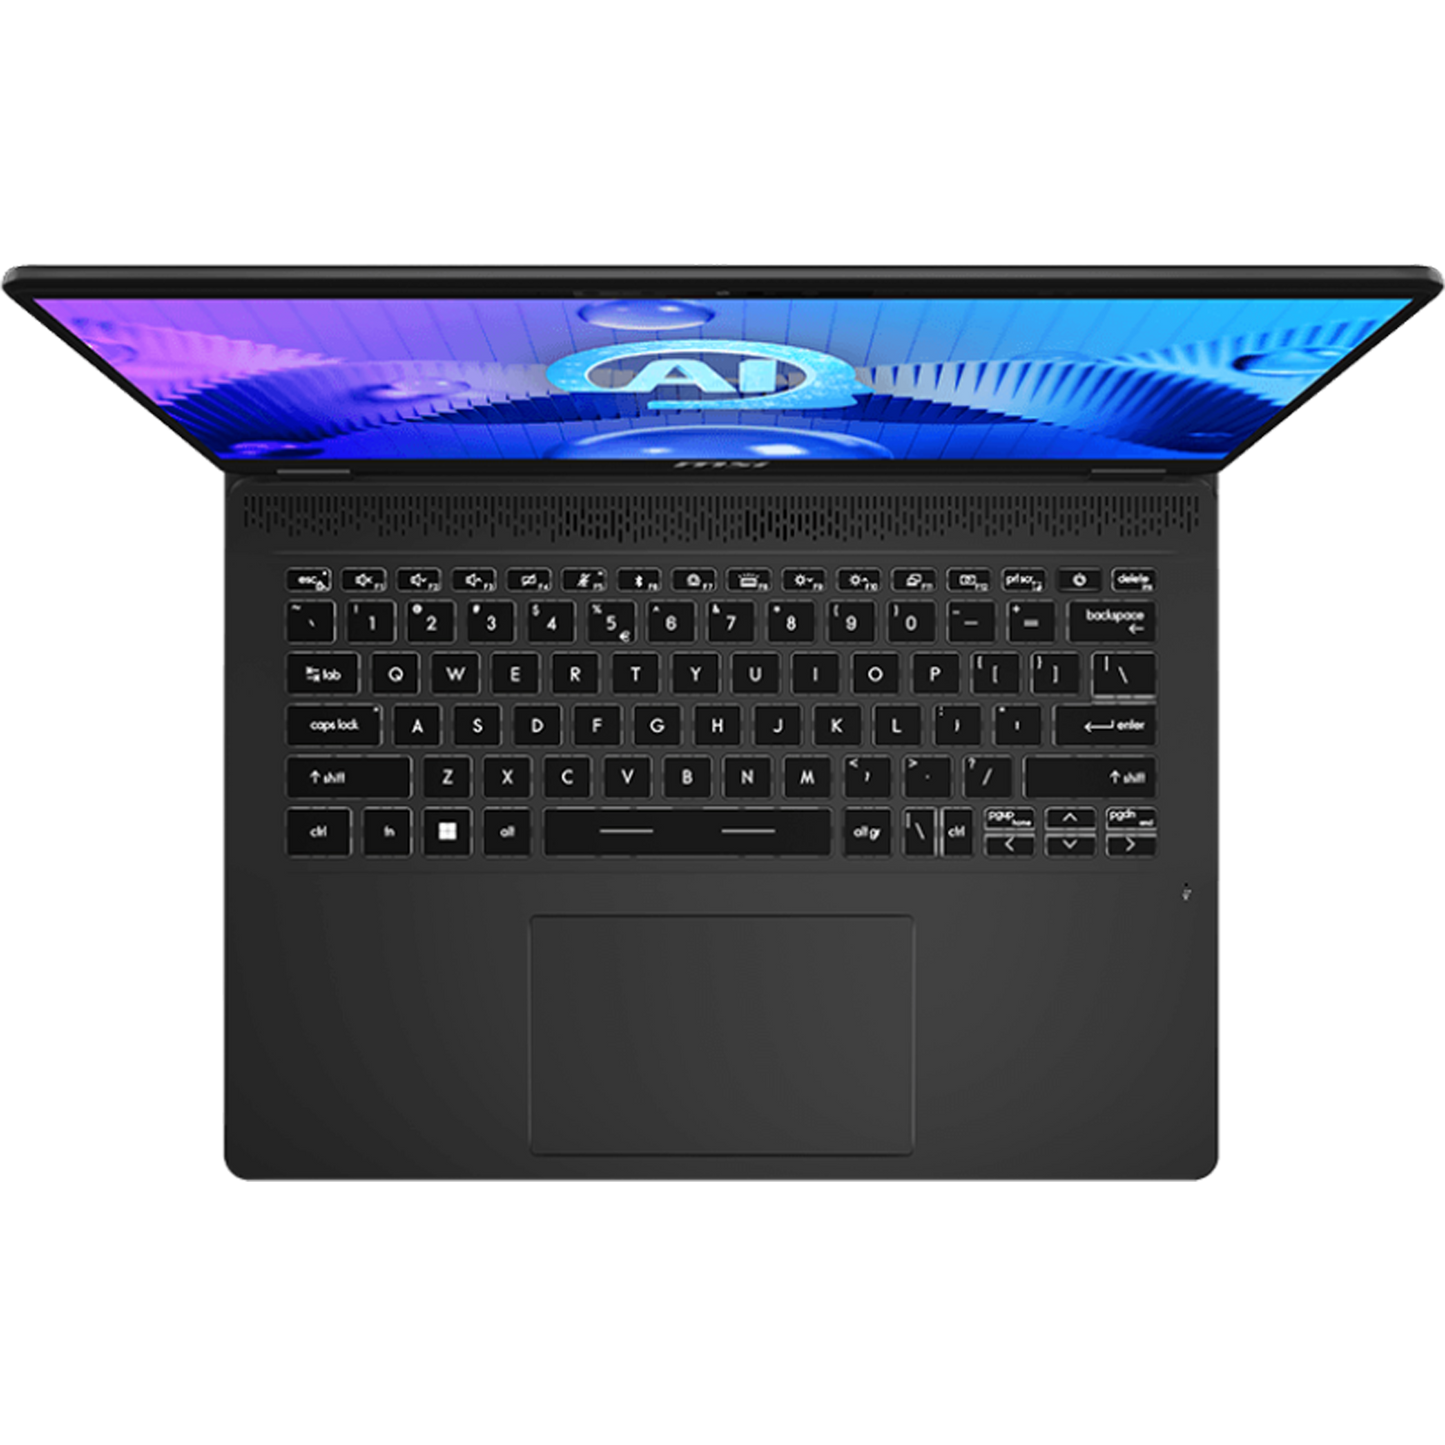 MSI Prestige 14 AI Studio C1VFG-029US Ultra Thin and Light Professional Laptop